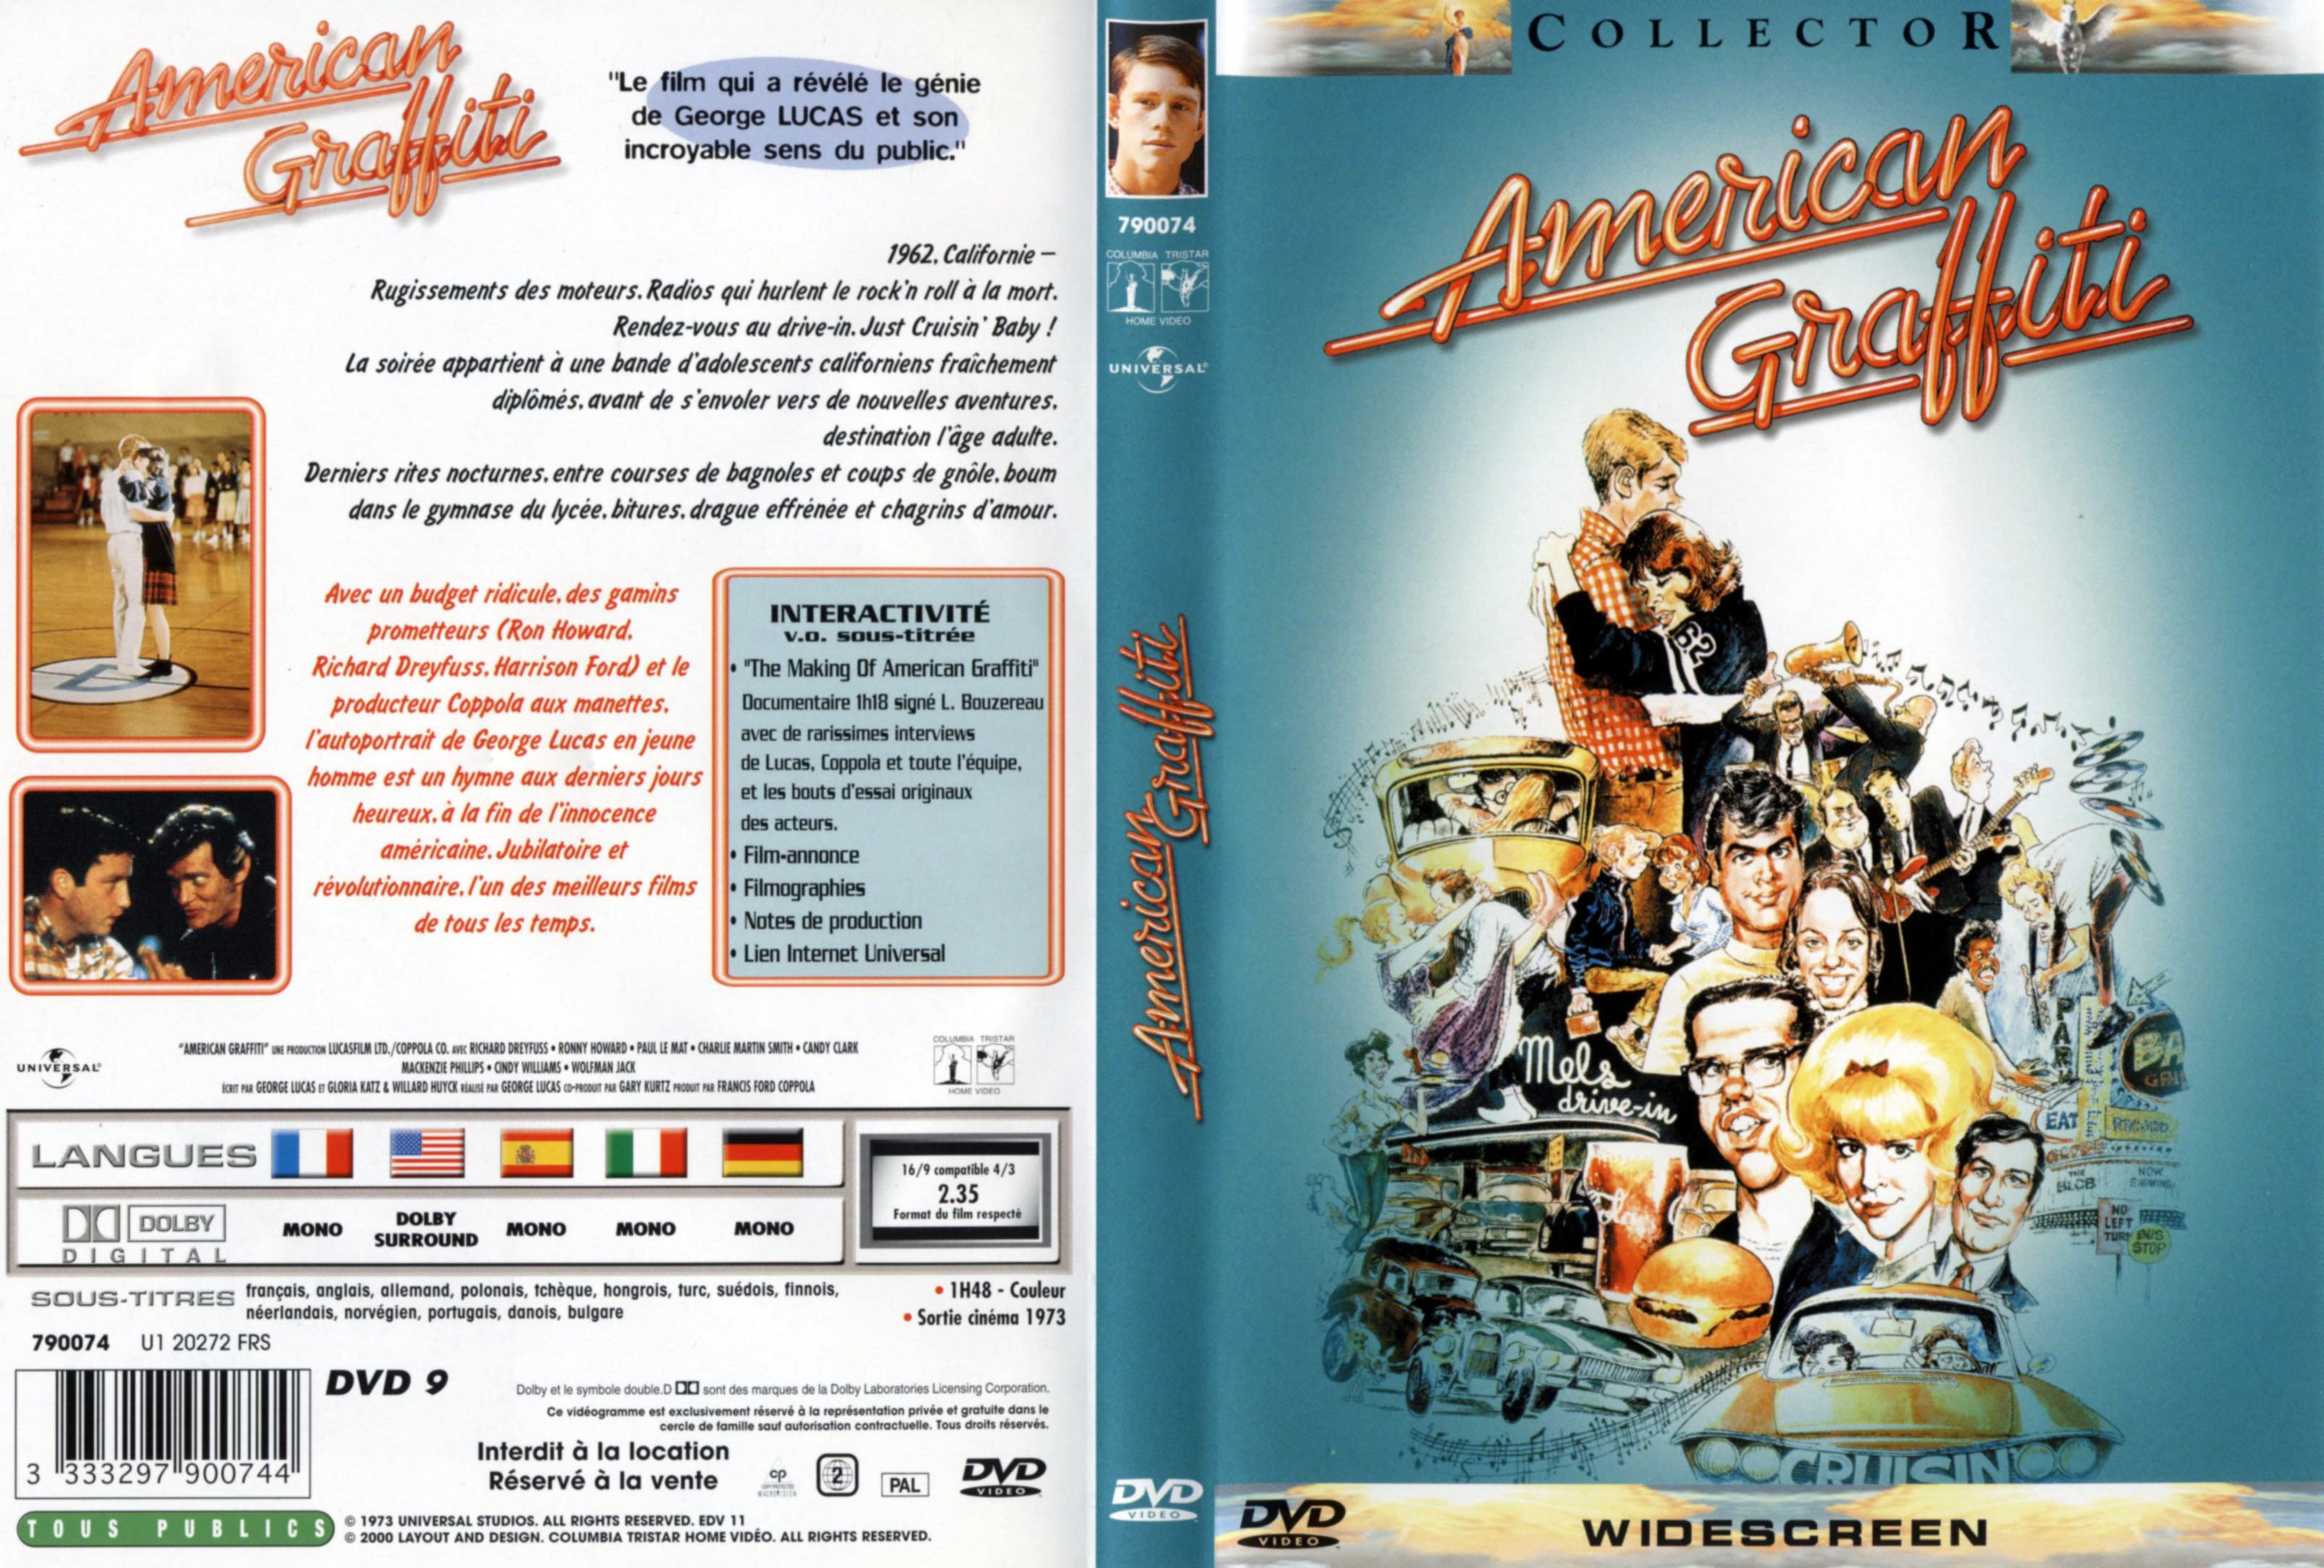 Jaquette DVD American graffiti